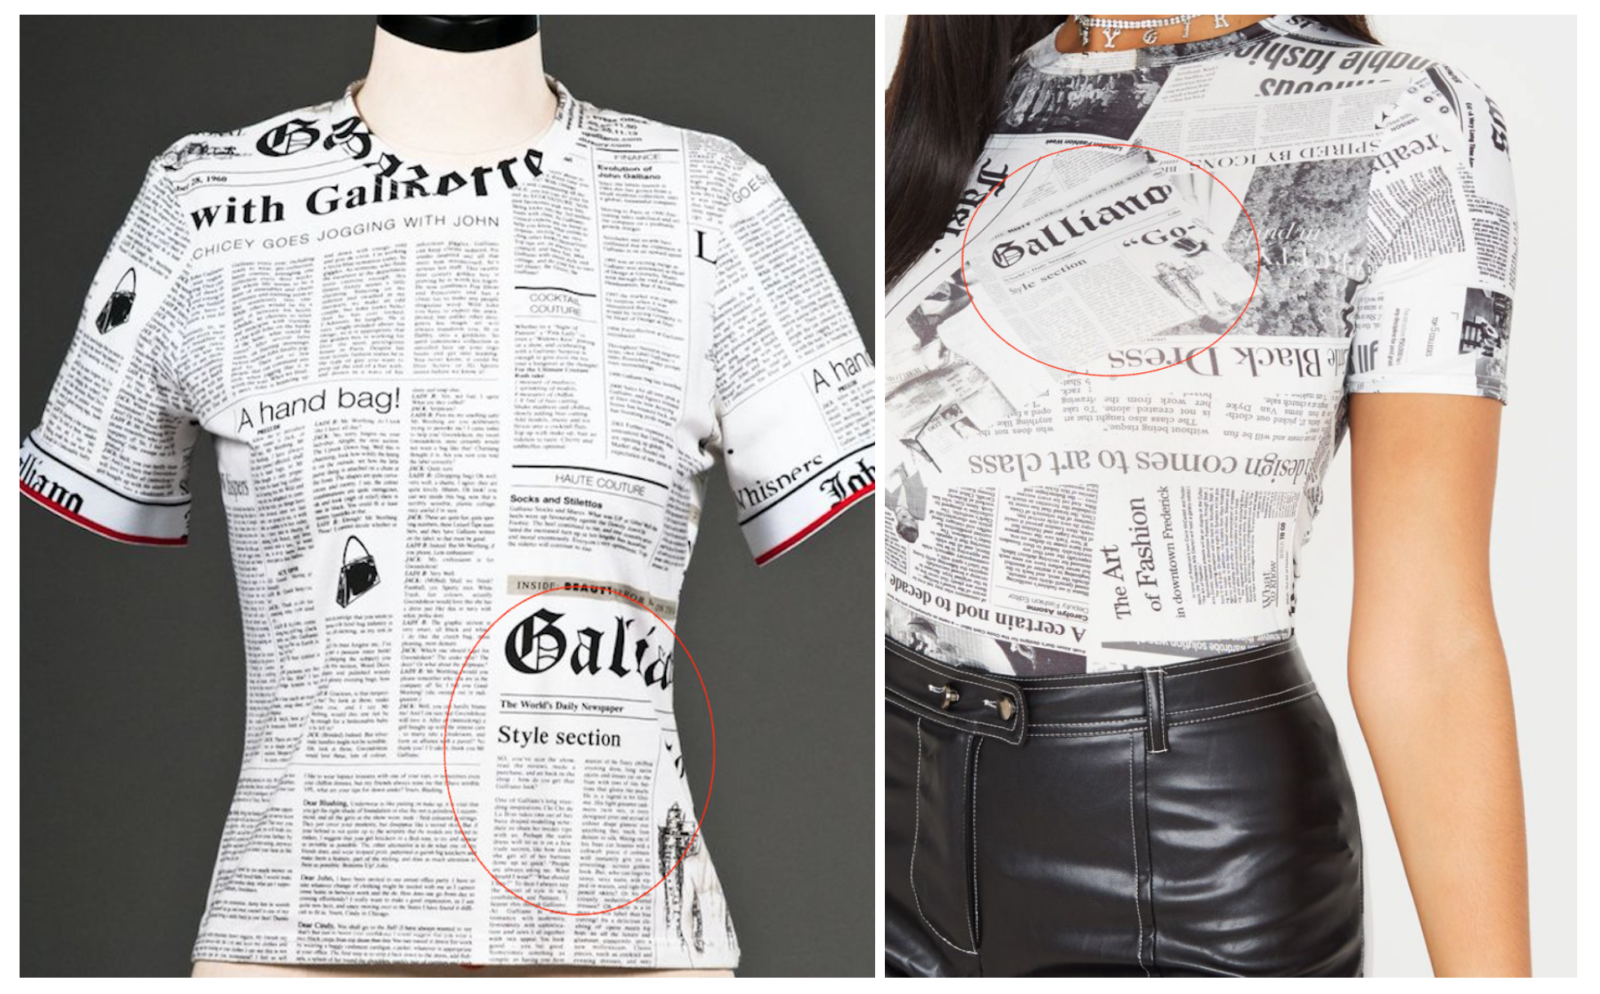  John Galliano’s t-shirt (left) & PLT’s t-shirt (right) 